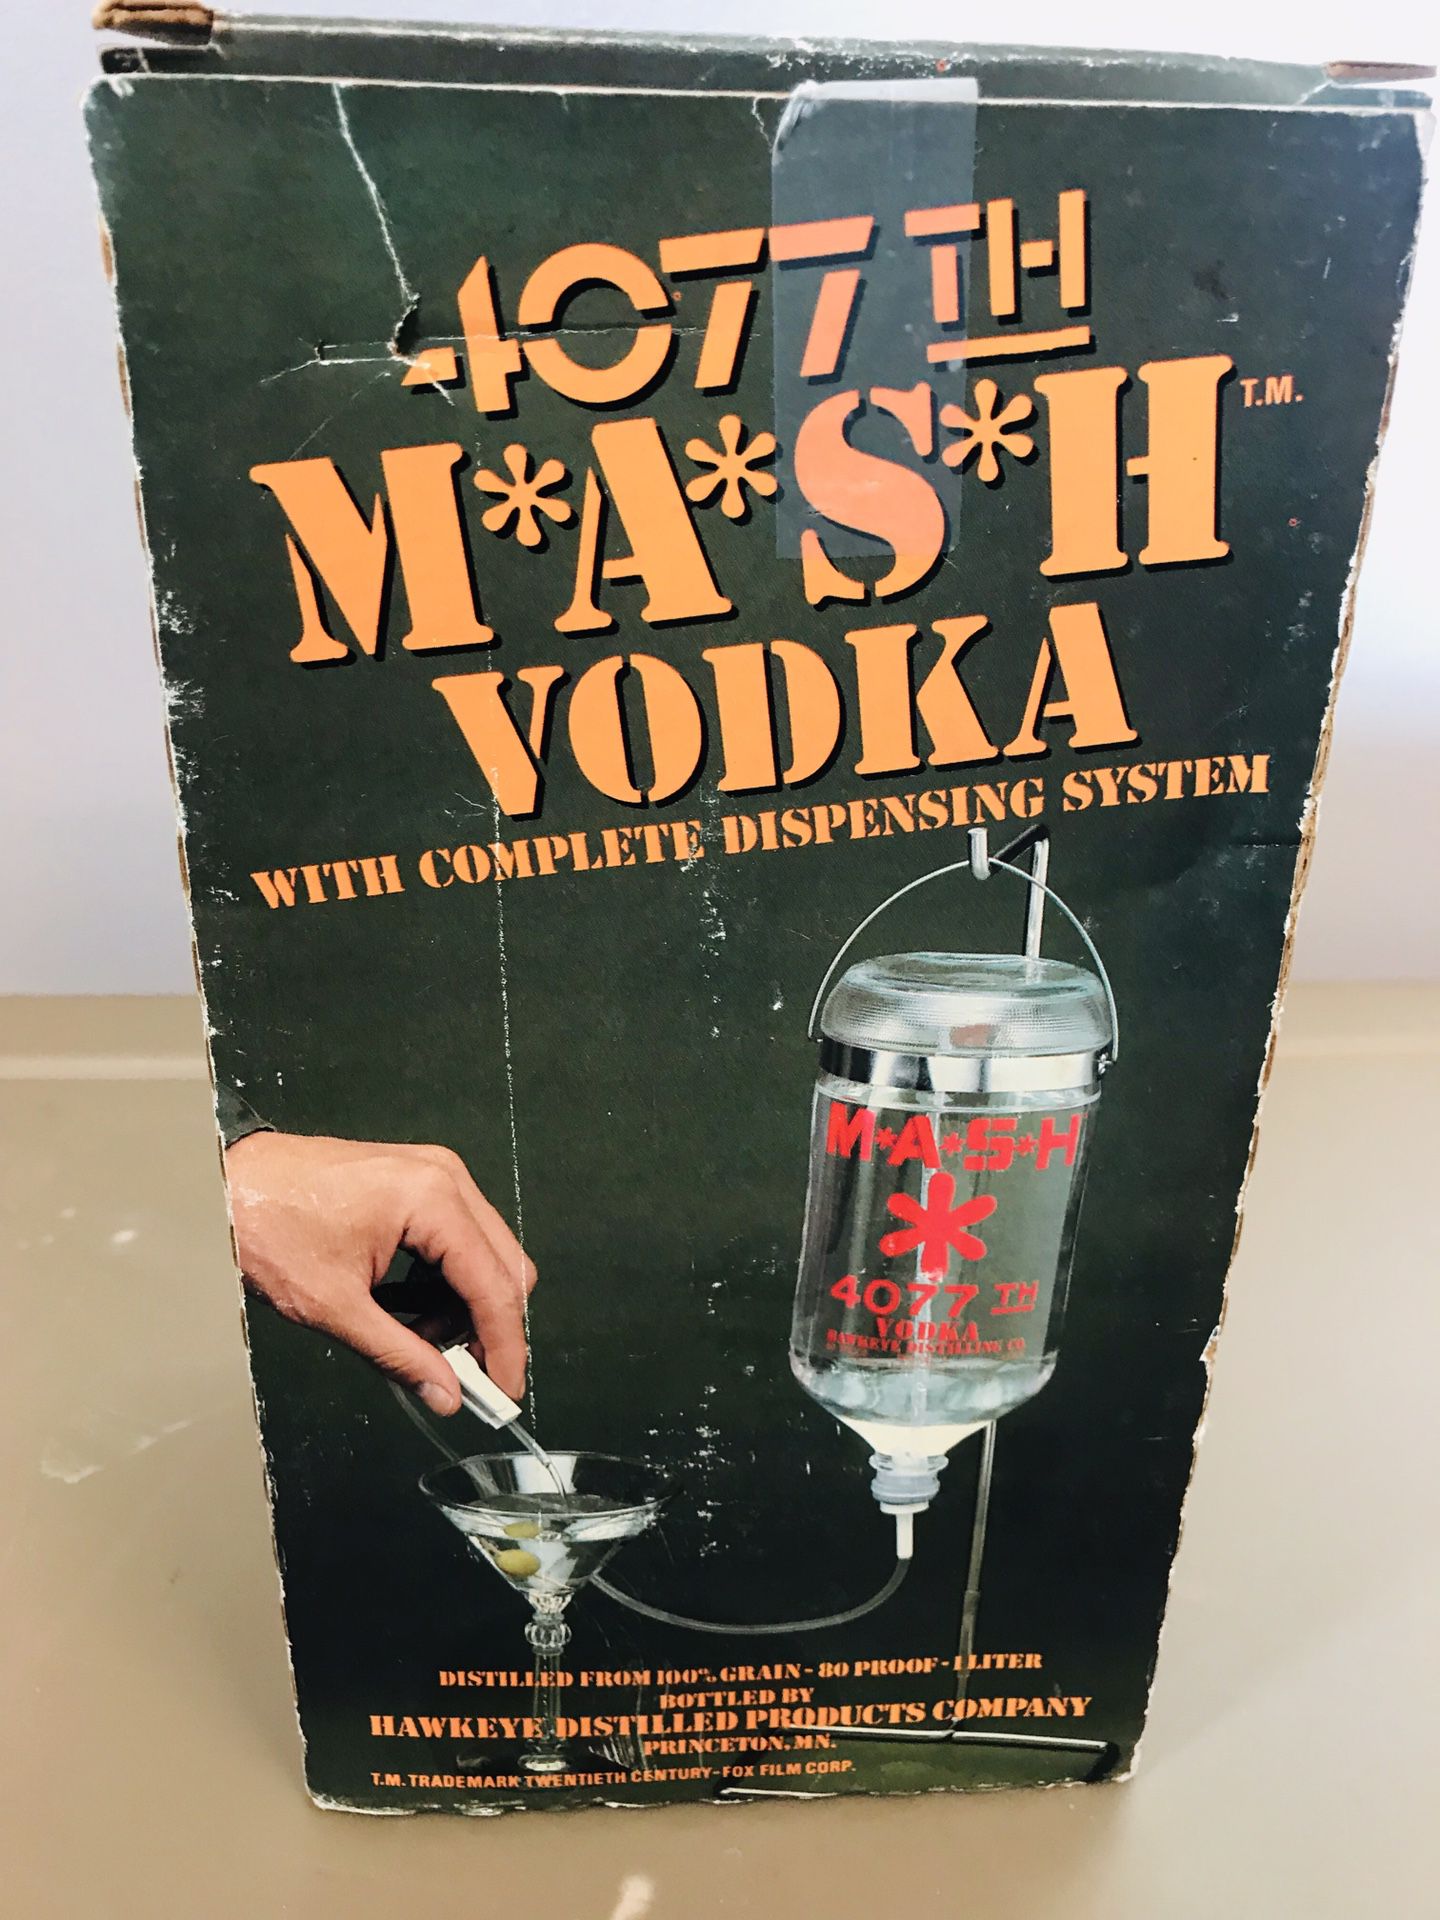 Mash army vodka drinks dispenser classic vintage